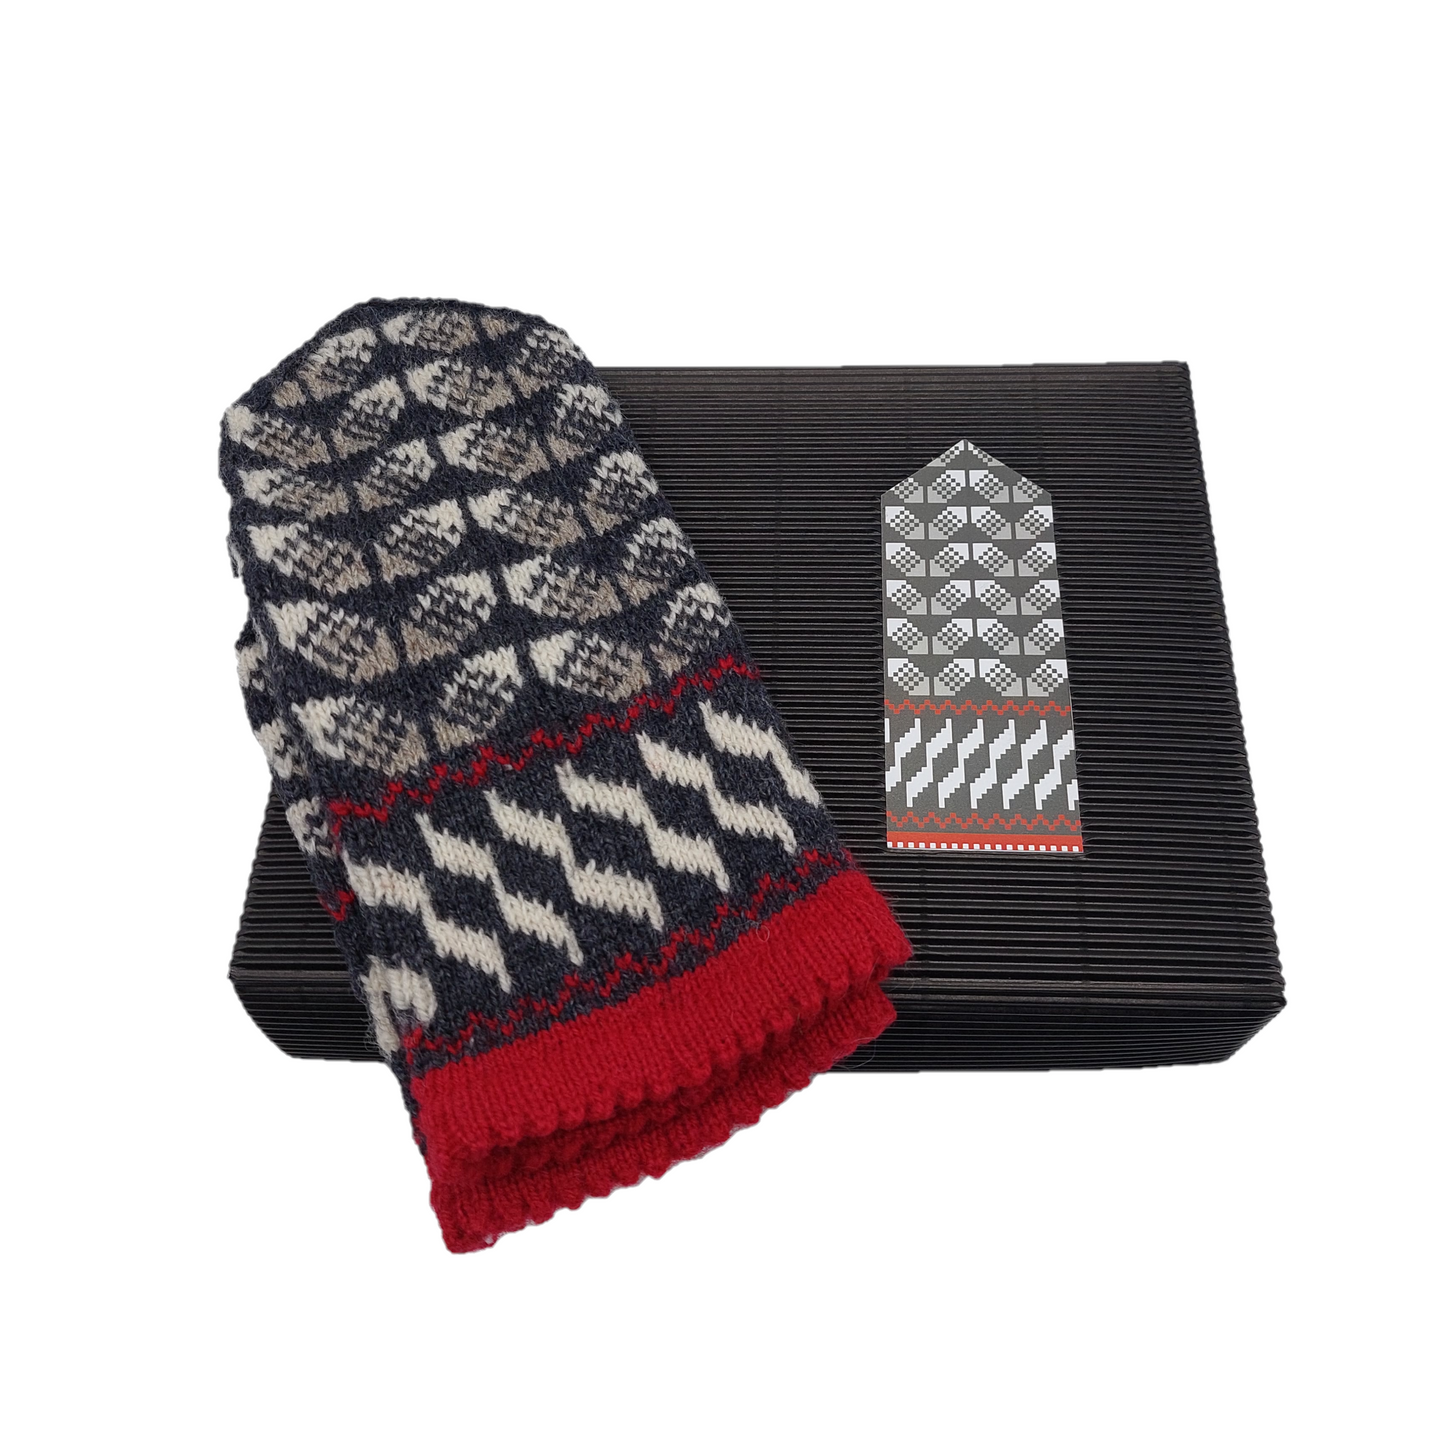 Knitting kit "Latvian Gray 9"